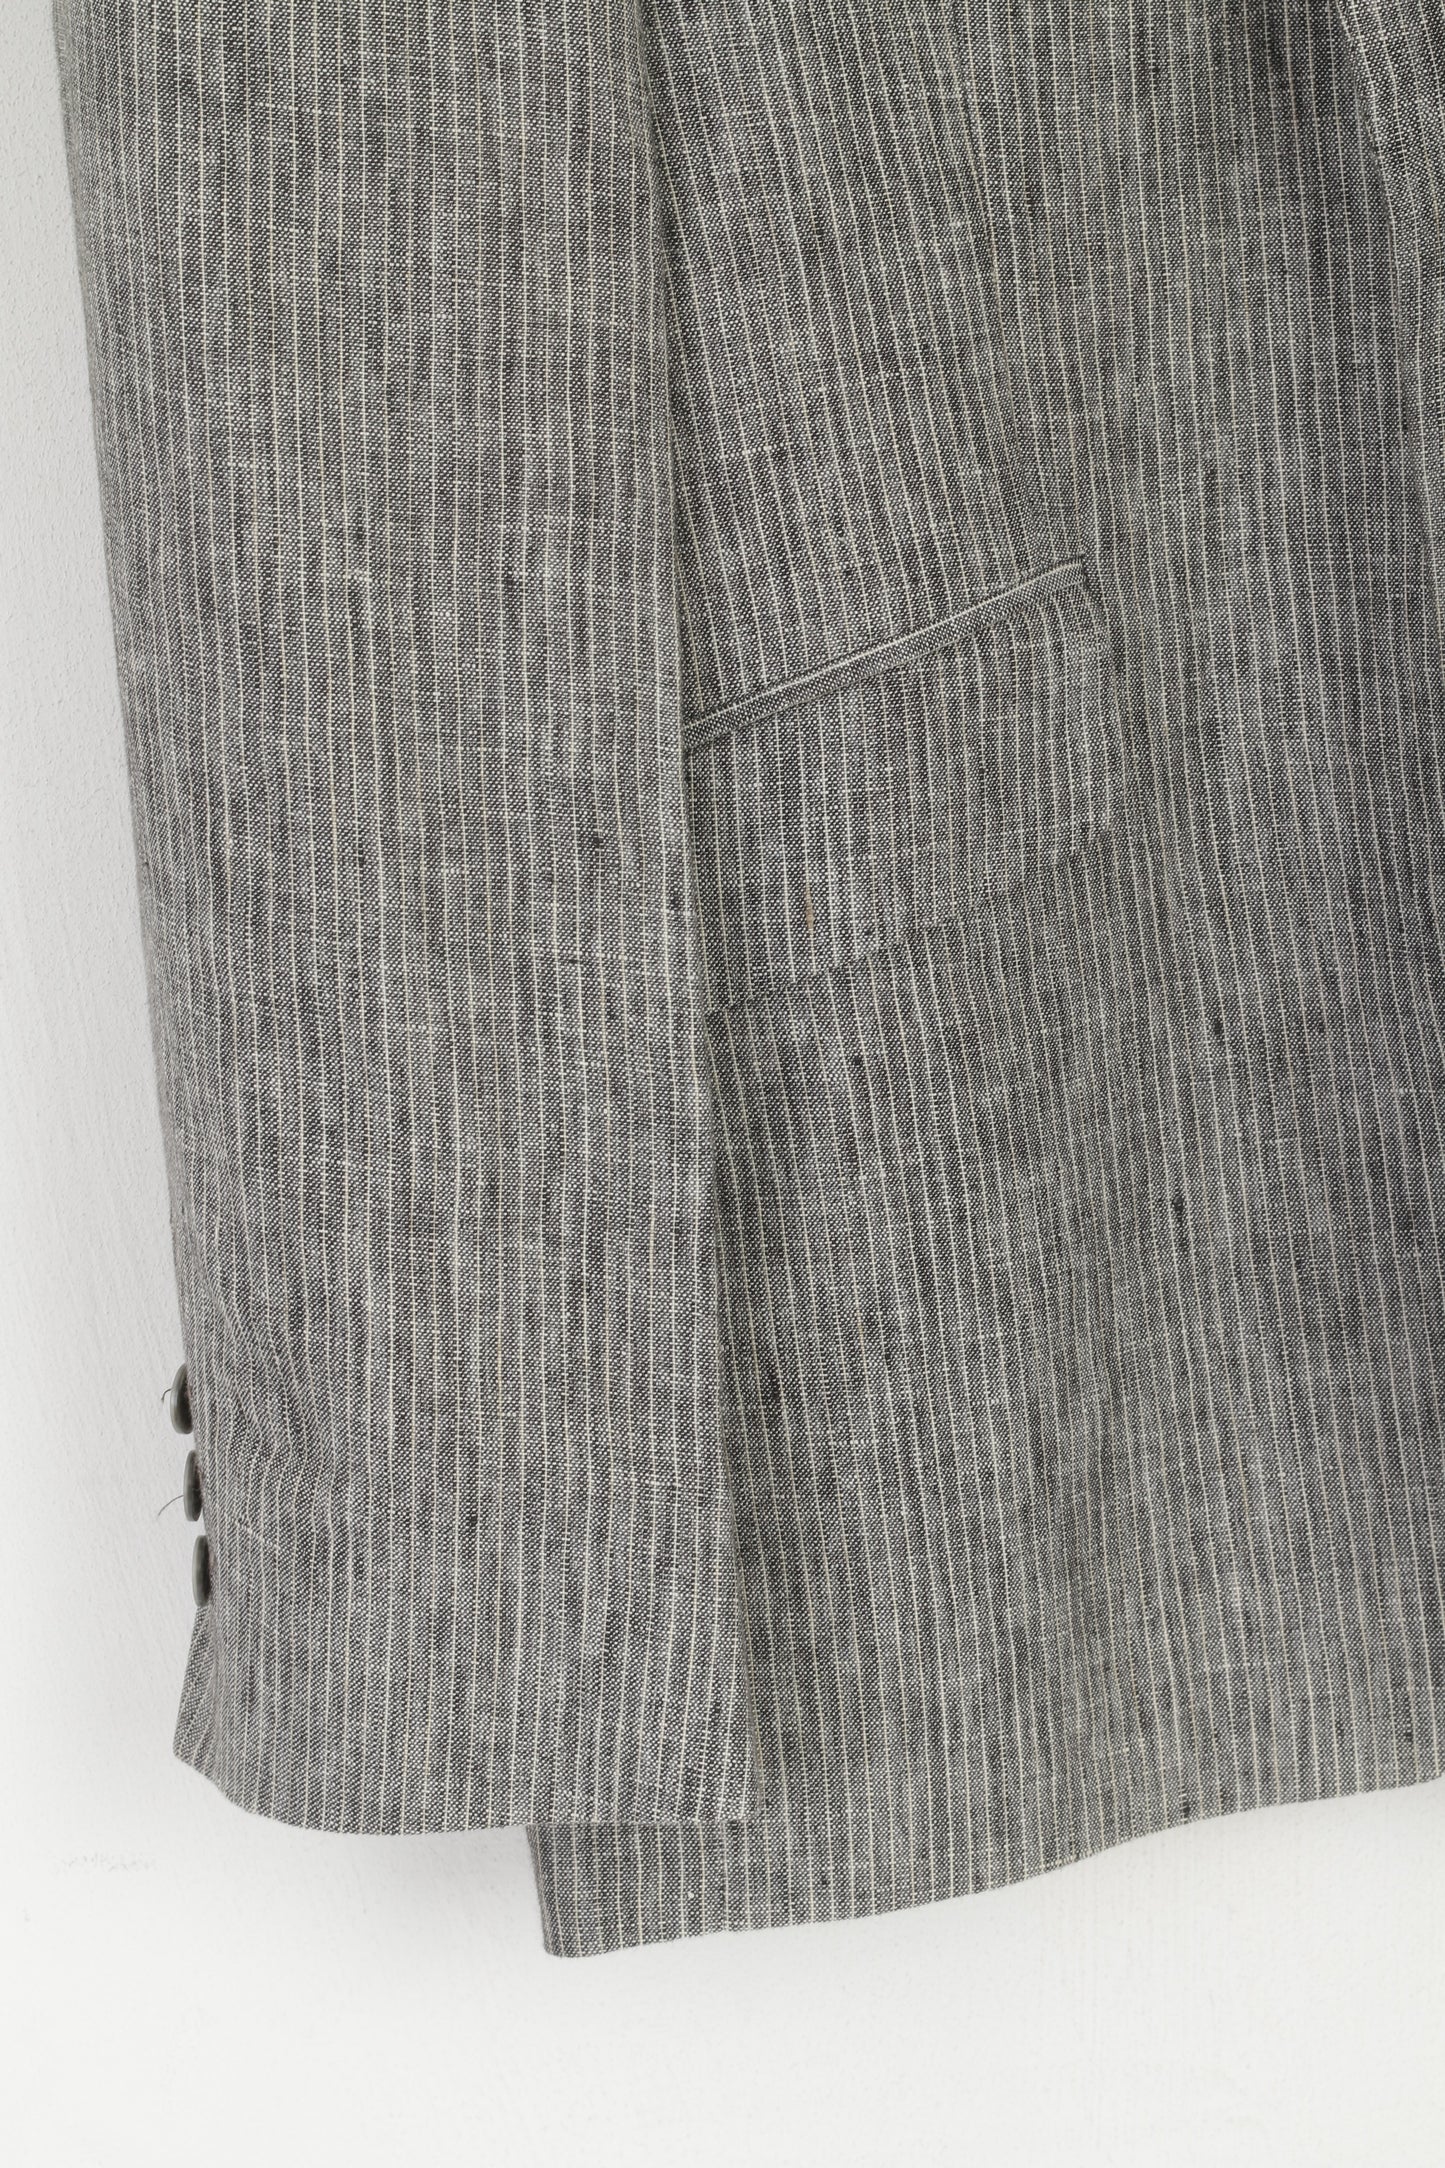 Gino Marcello Men 50 40 Blazer Grey Striped 100% Linen Single Breasted Jacket